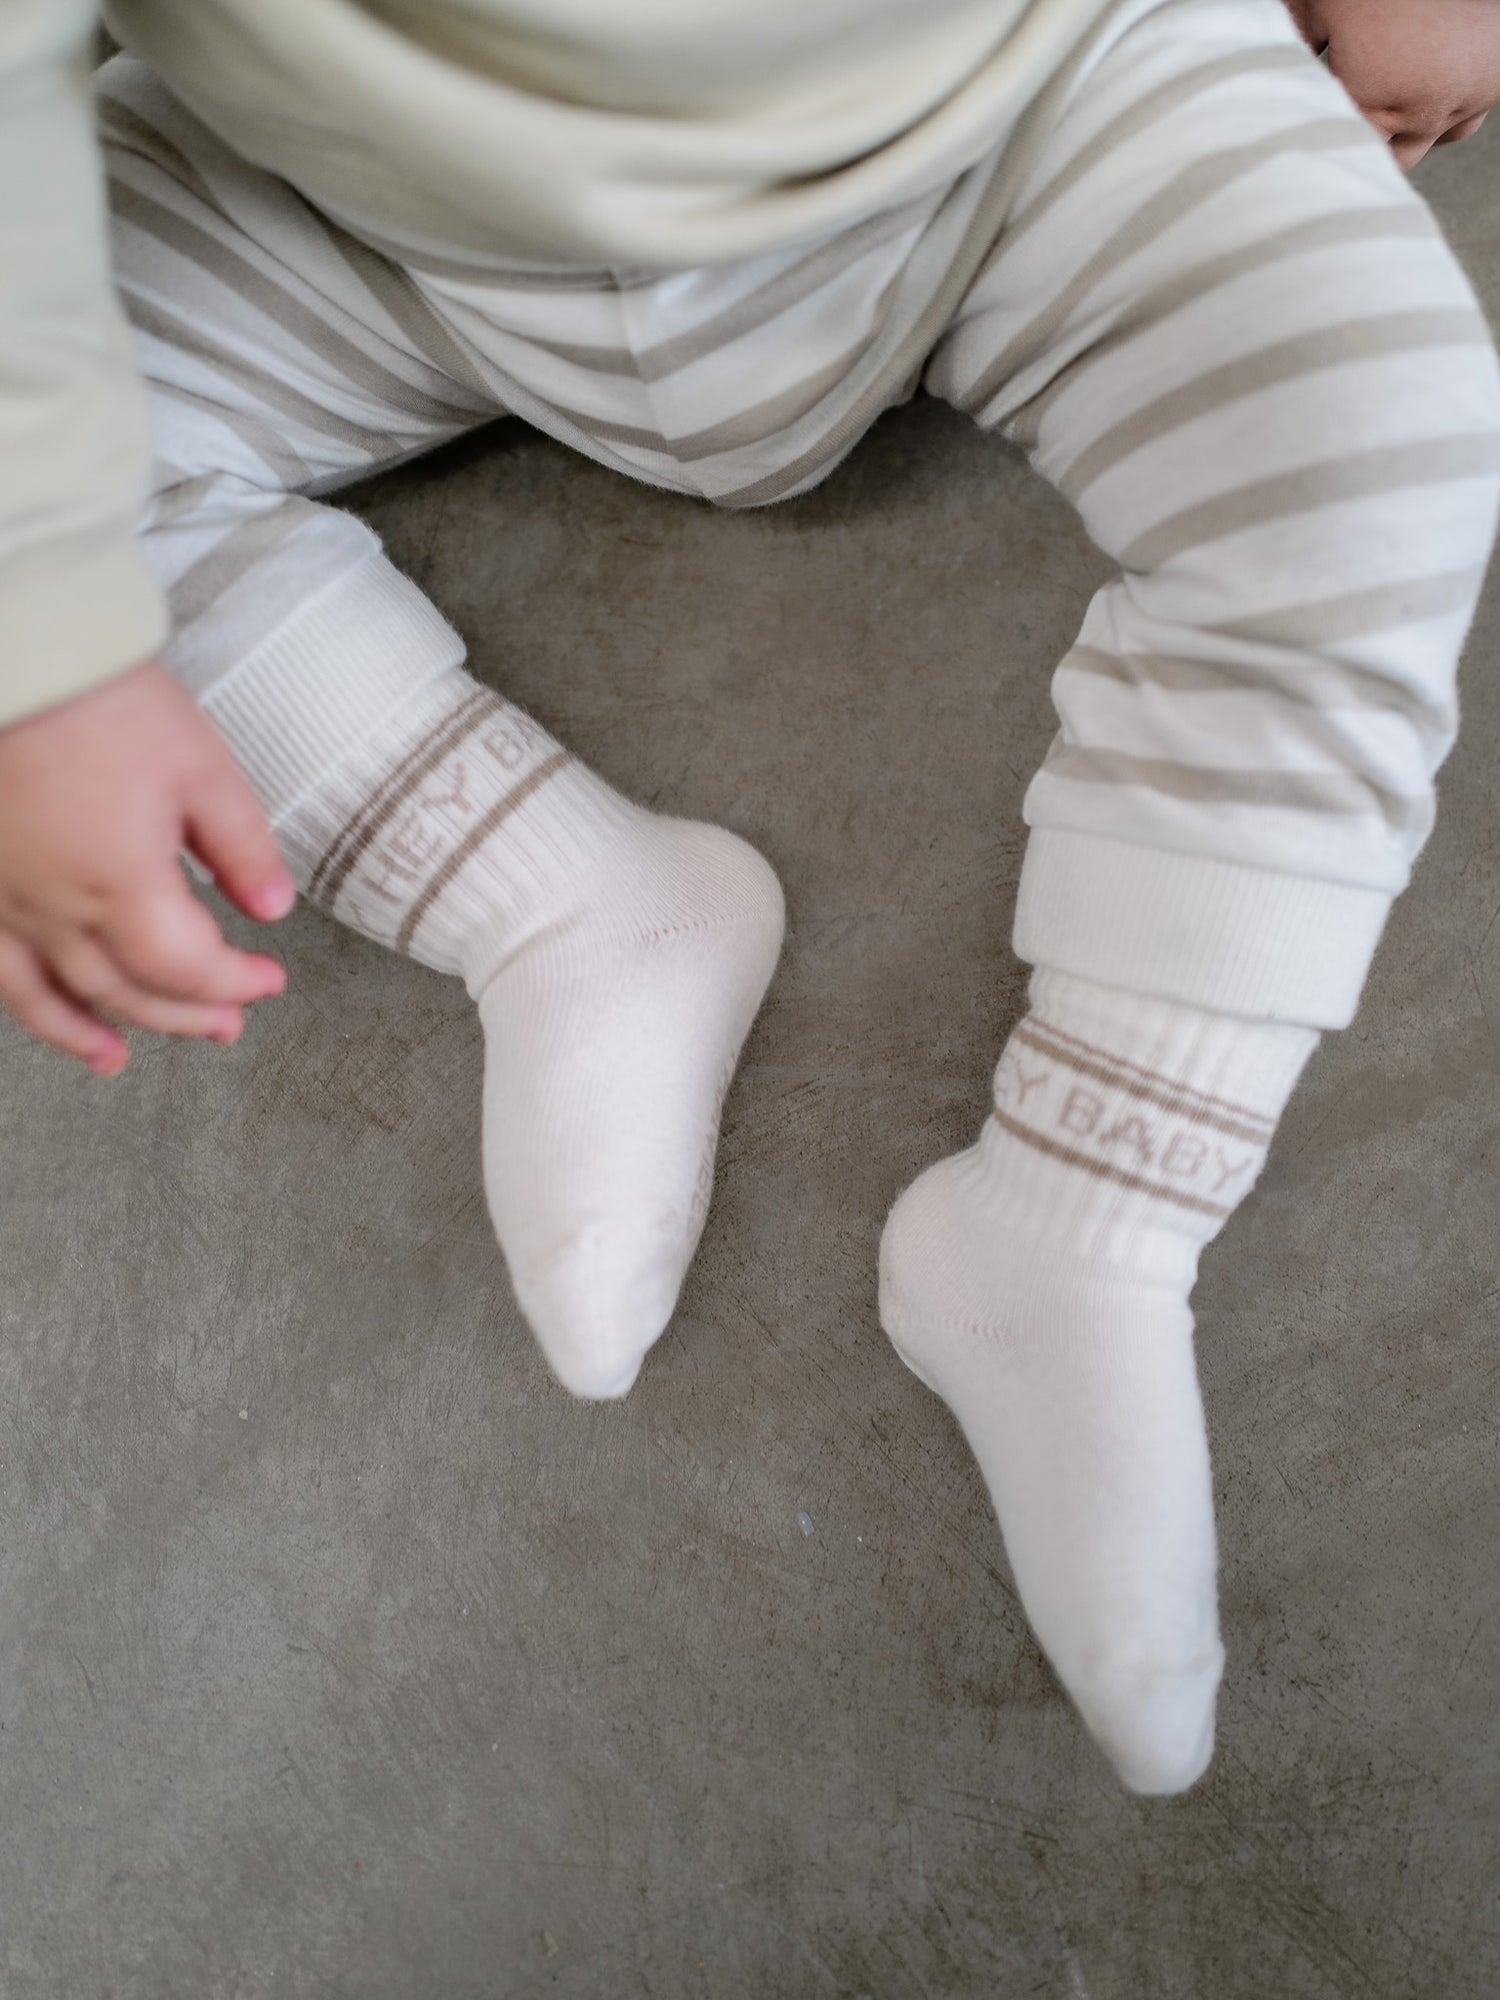 Pants Striped Baby - milk/ beige - FAMVIBES 